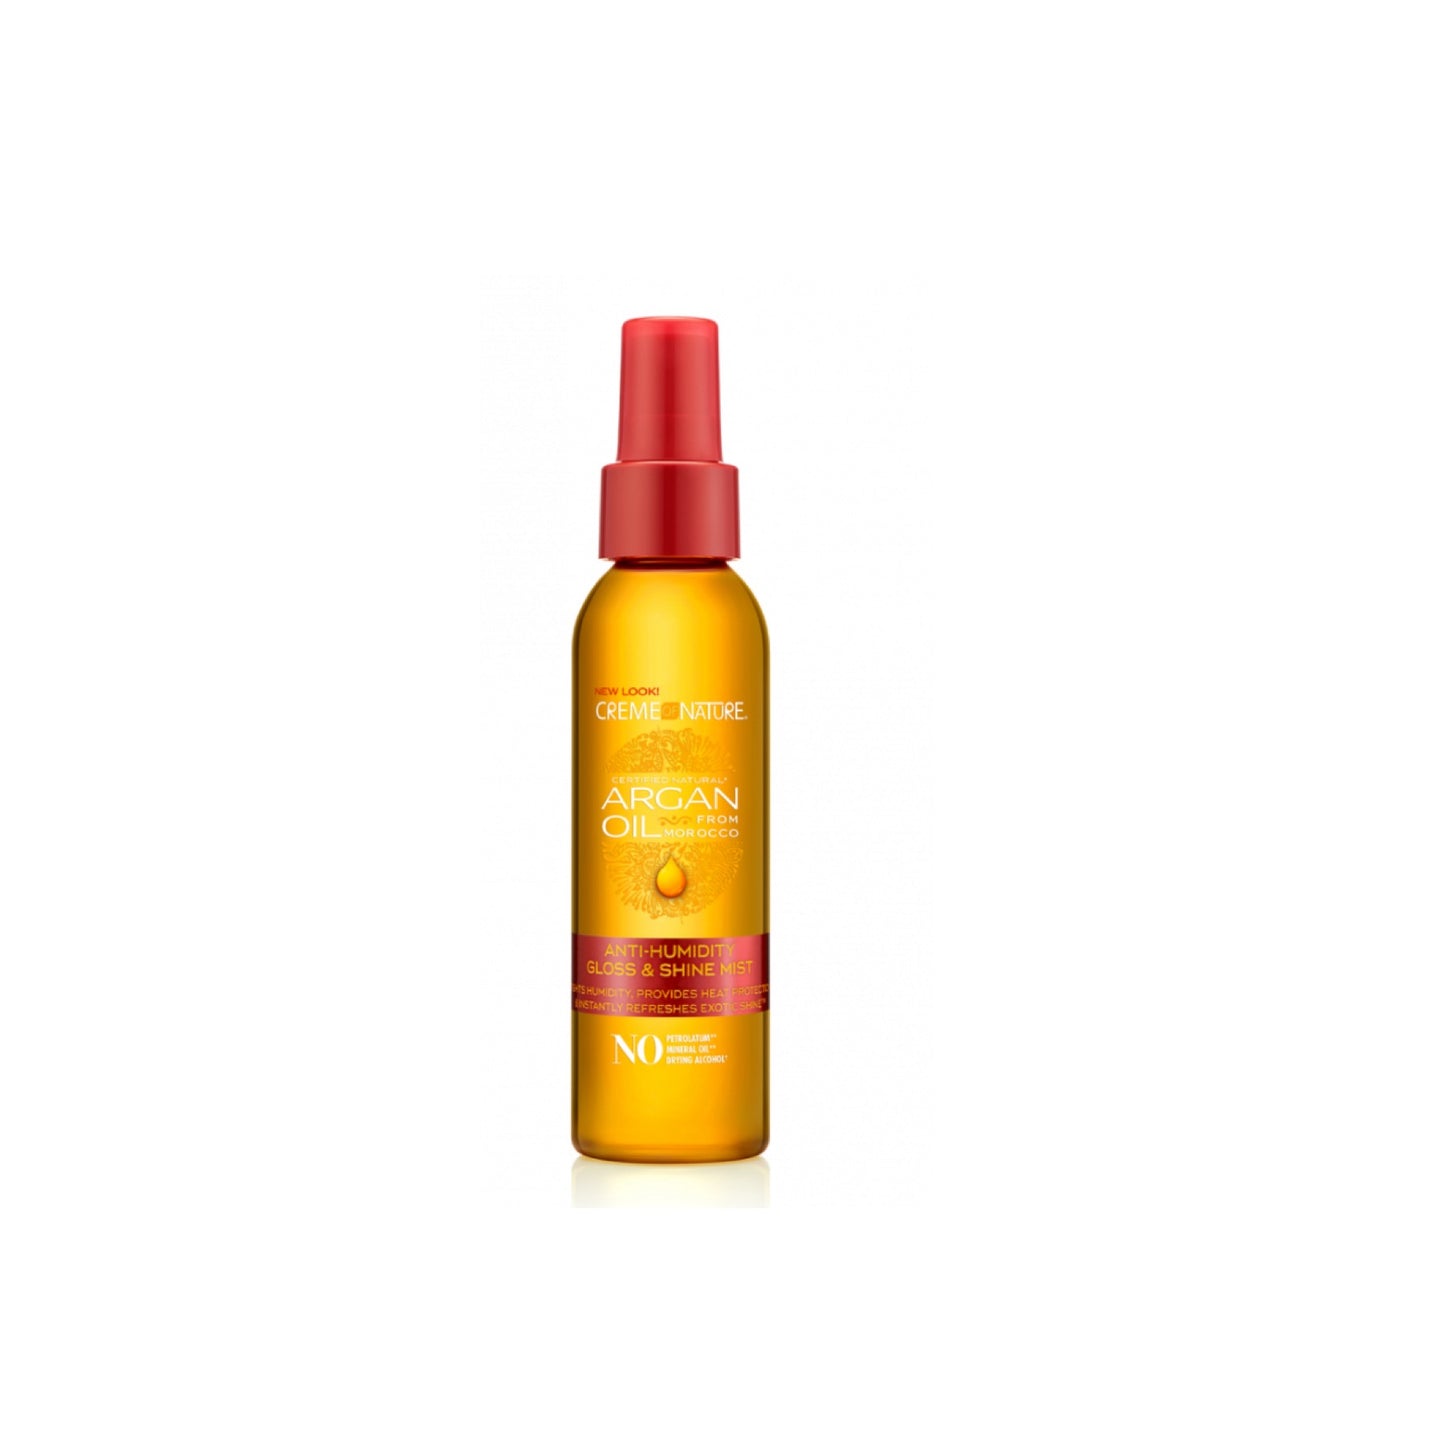 Argan Oil From Morocco Anti-Humidity Gloss & Shine Mist 120ml